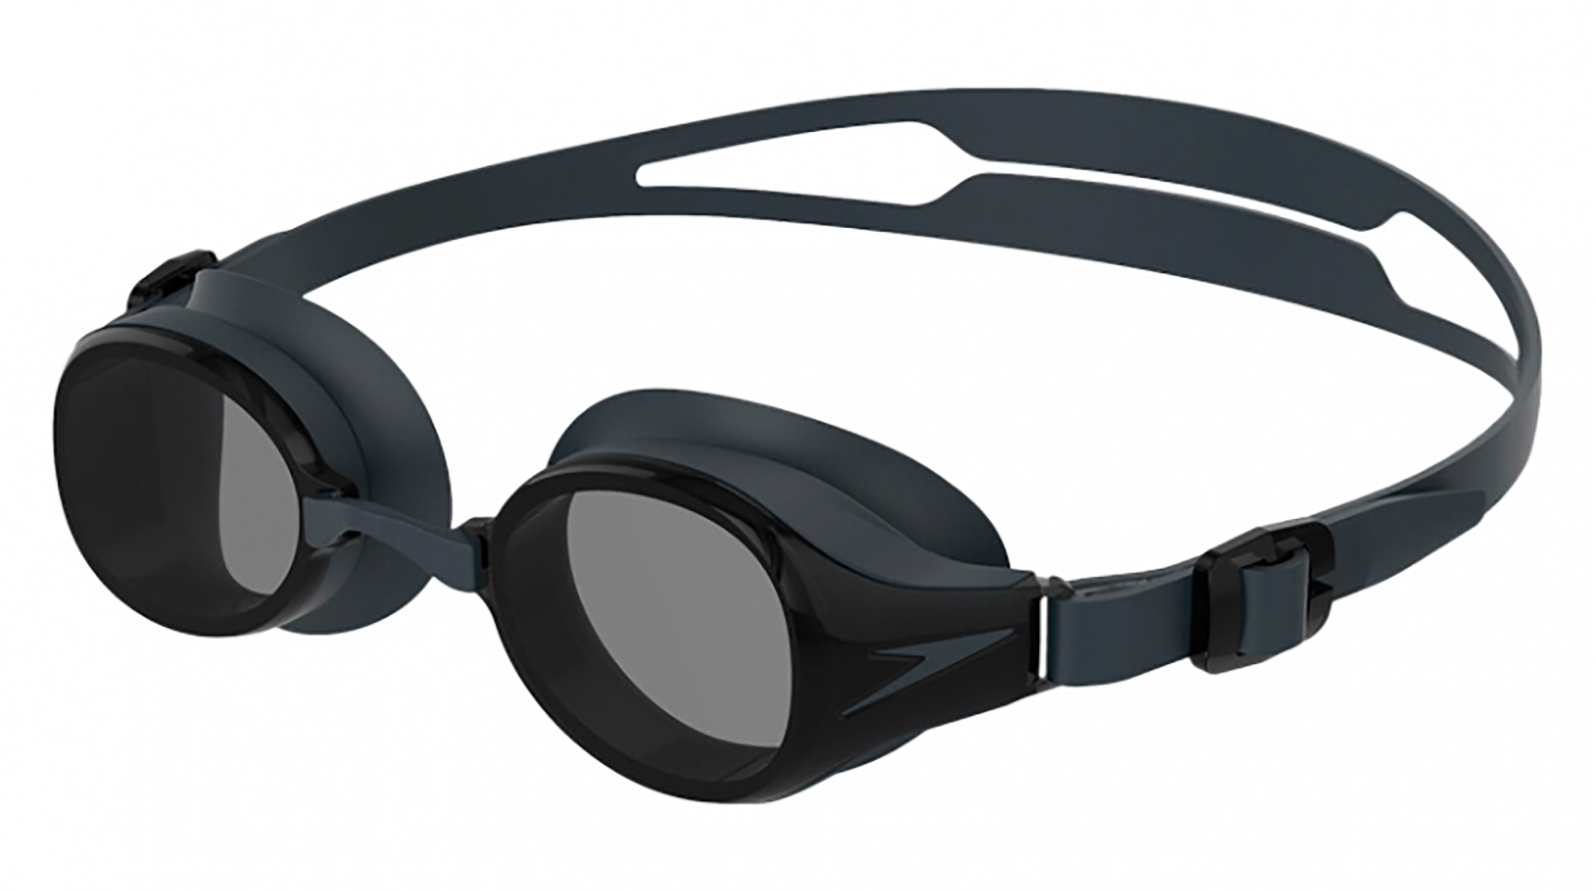 Speedo Очки для плавания Hydropure Optical F808 -3,0 speedo очки для плавания hydropure optical f809 4 0